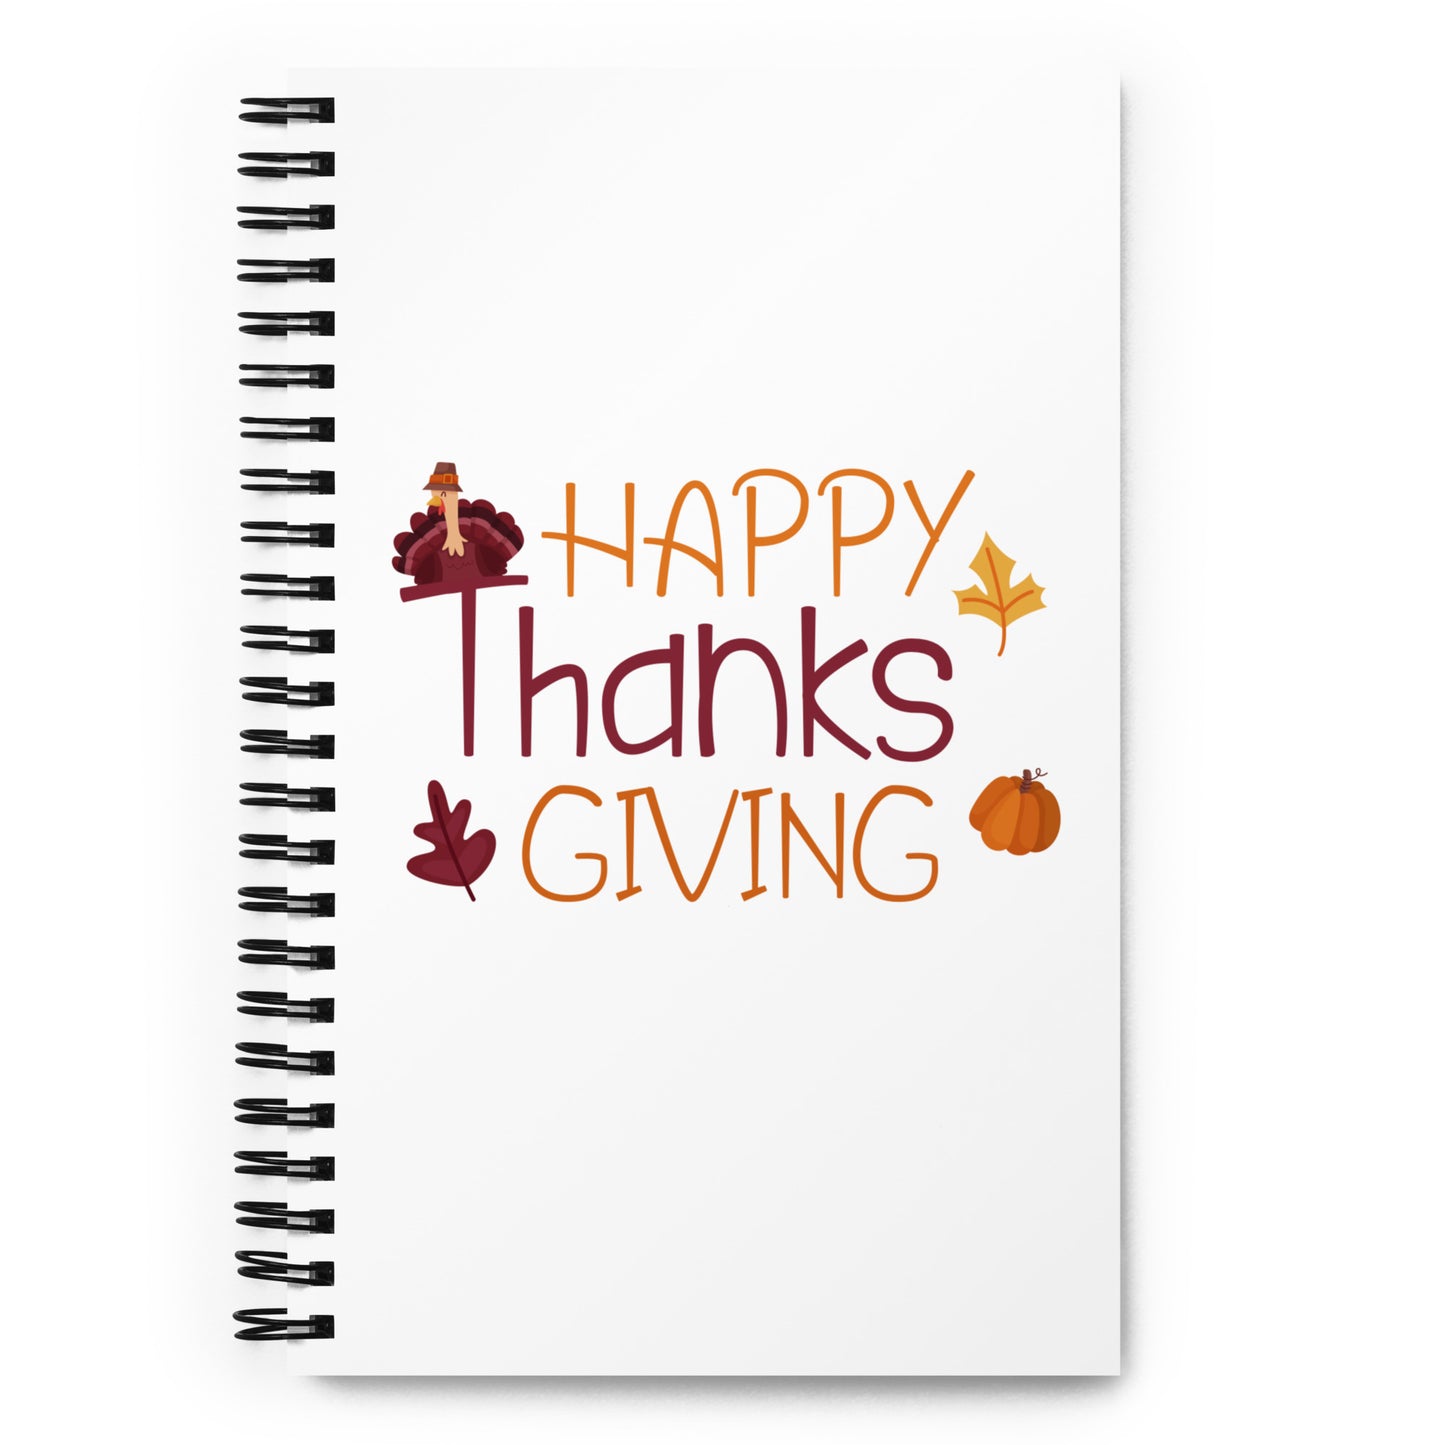 Happy Thanksgiving Spiral notebook